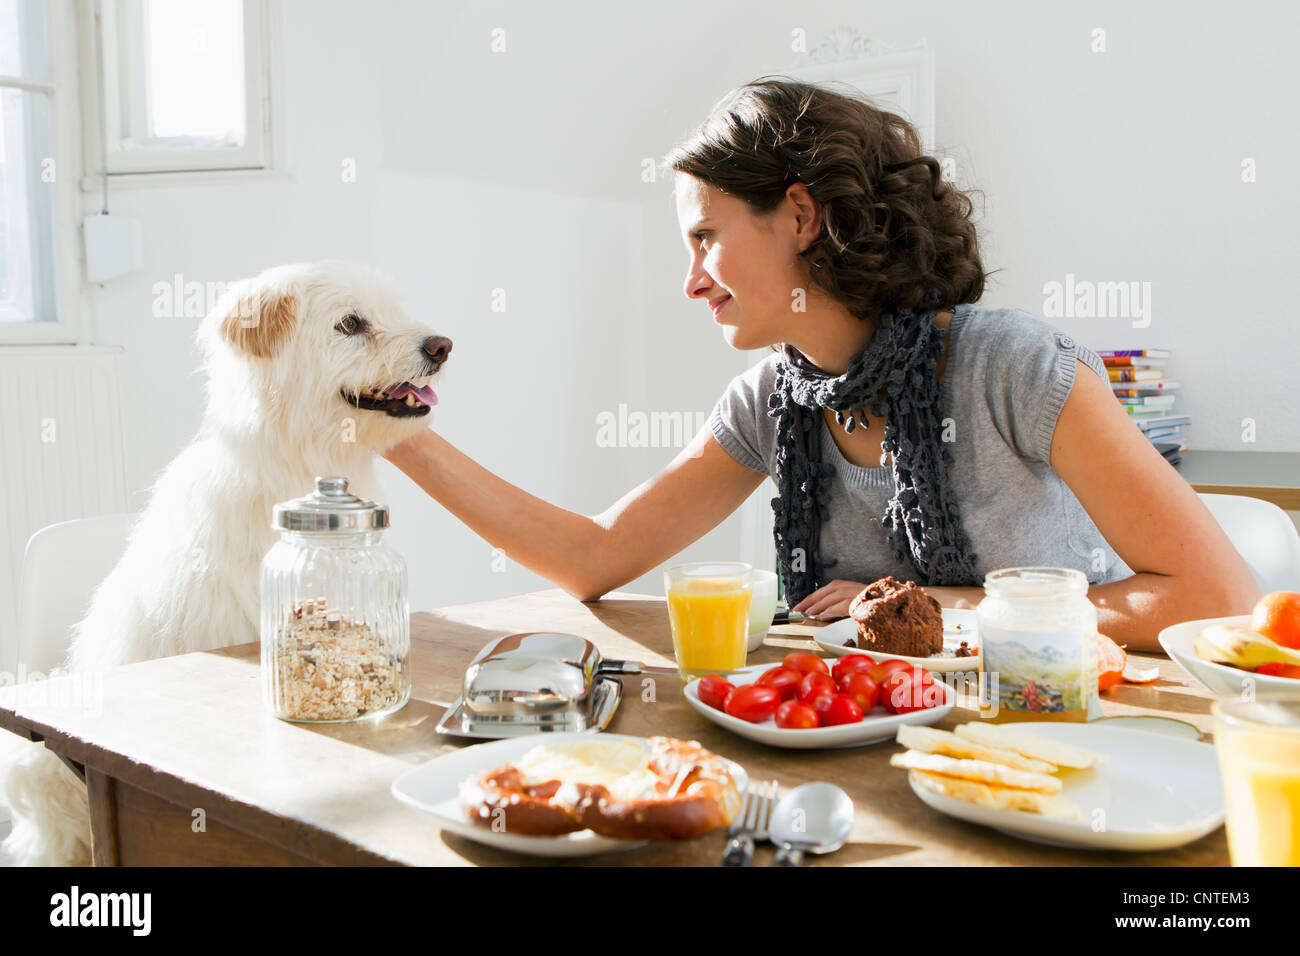 Woman petting dog at table Stock Photo